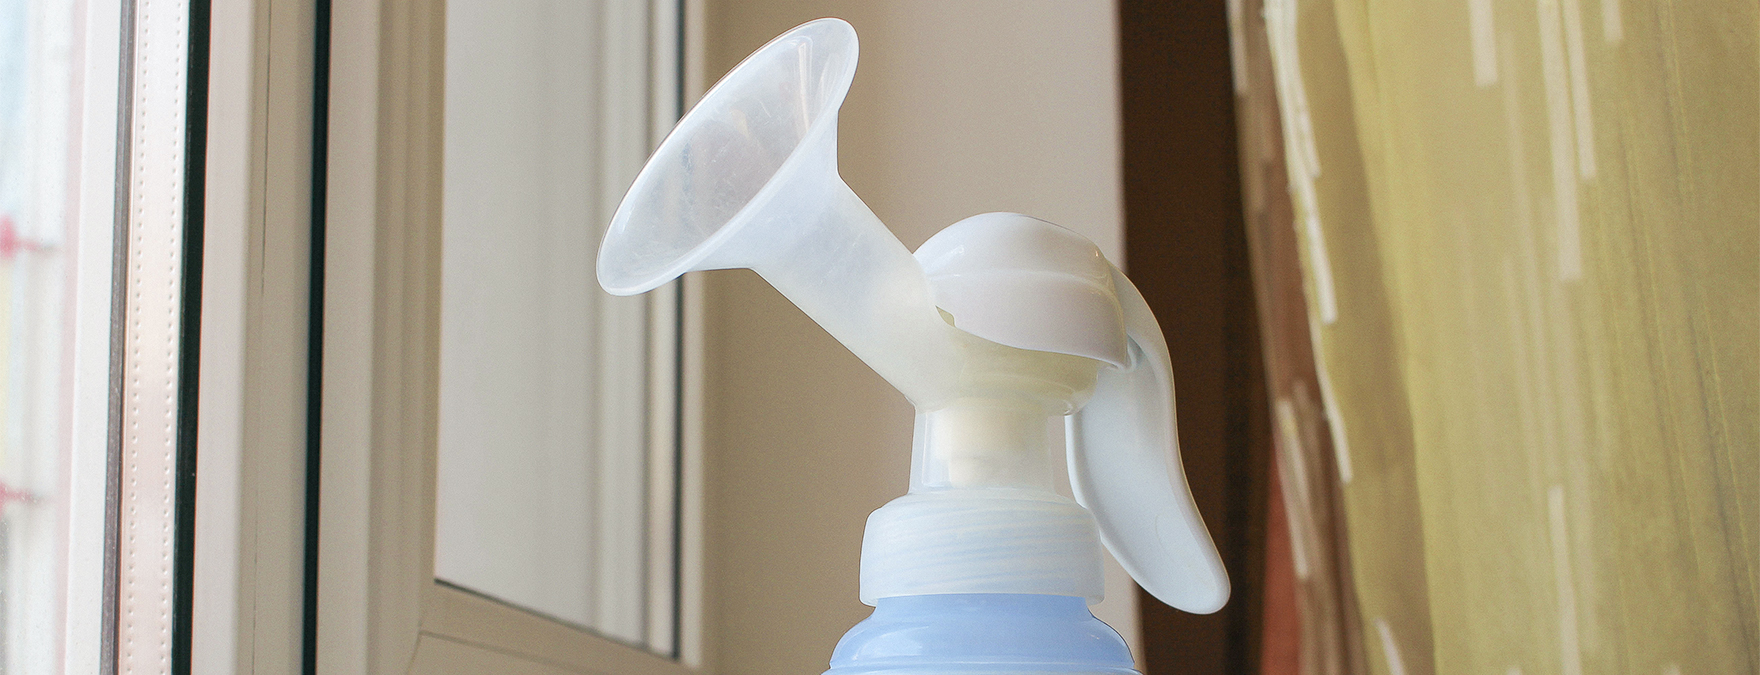 Breast pump and bottle of milk on the windowsill